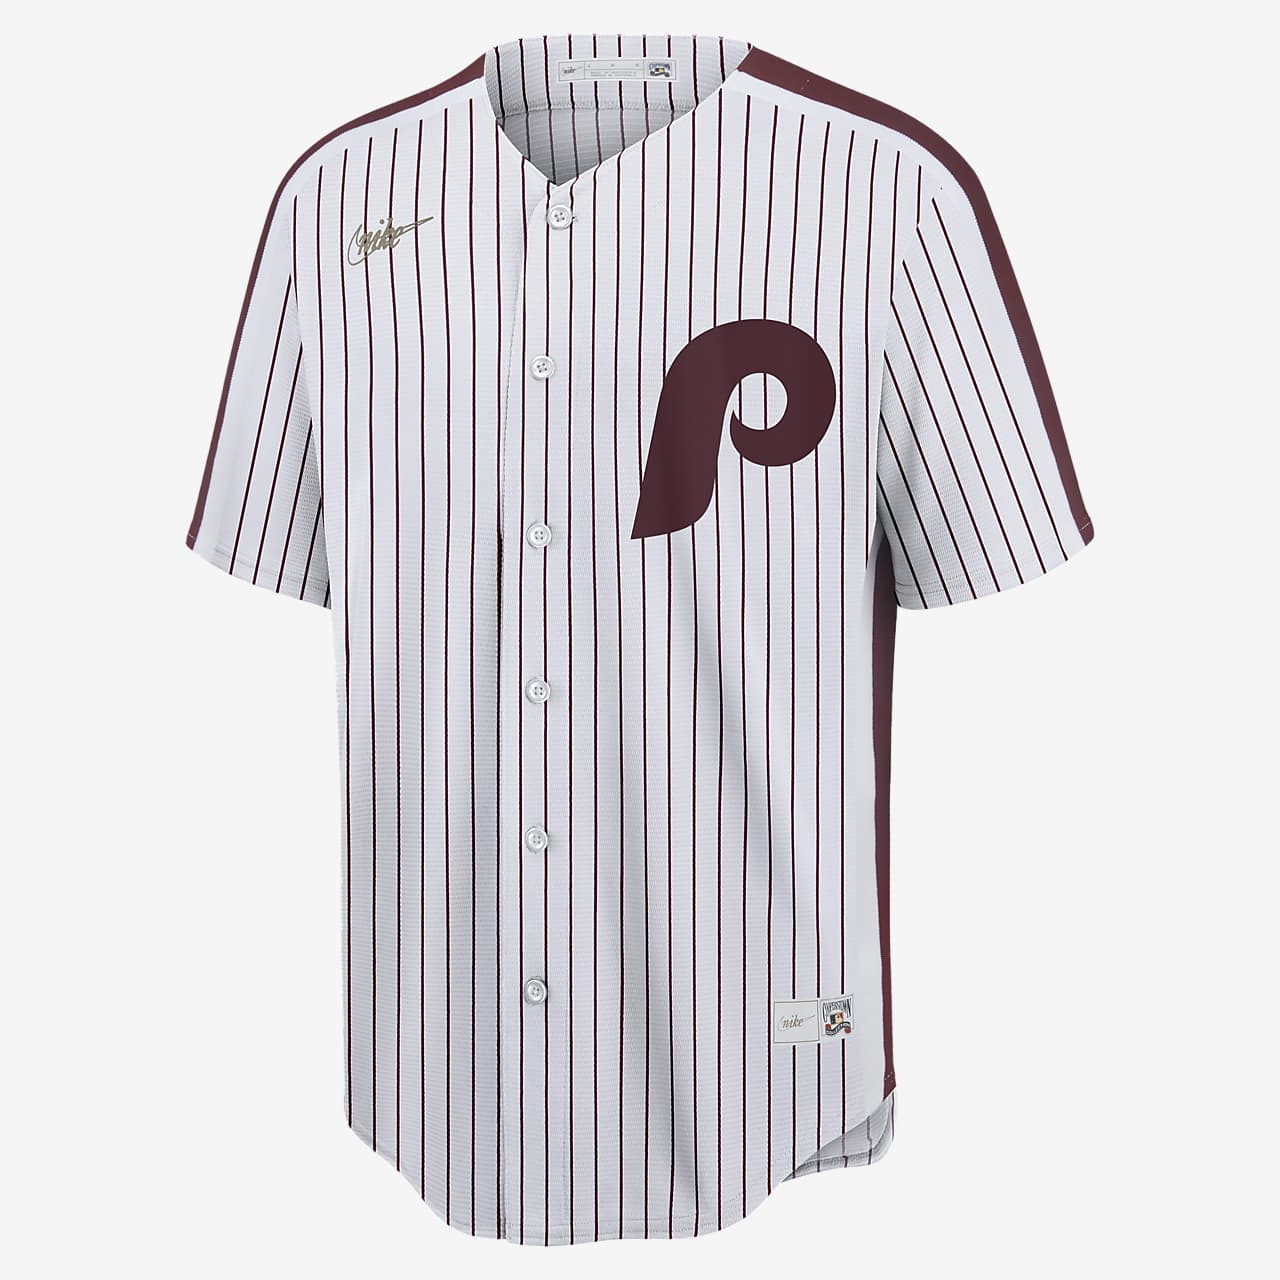 phillies baseball jerseys